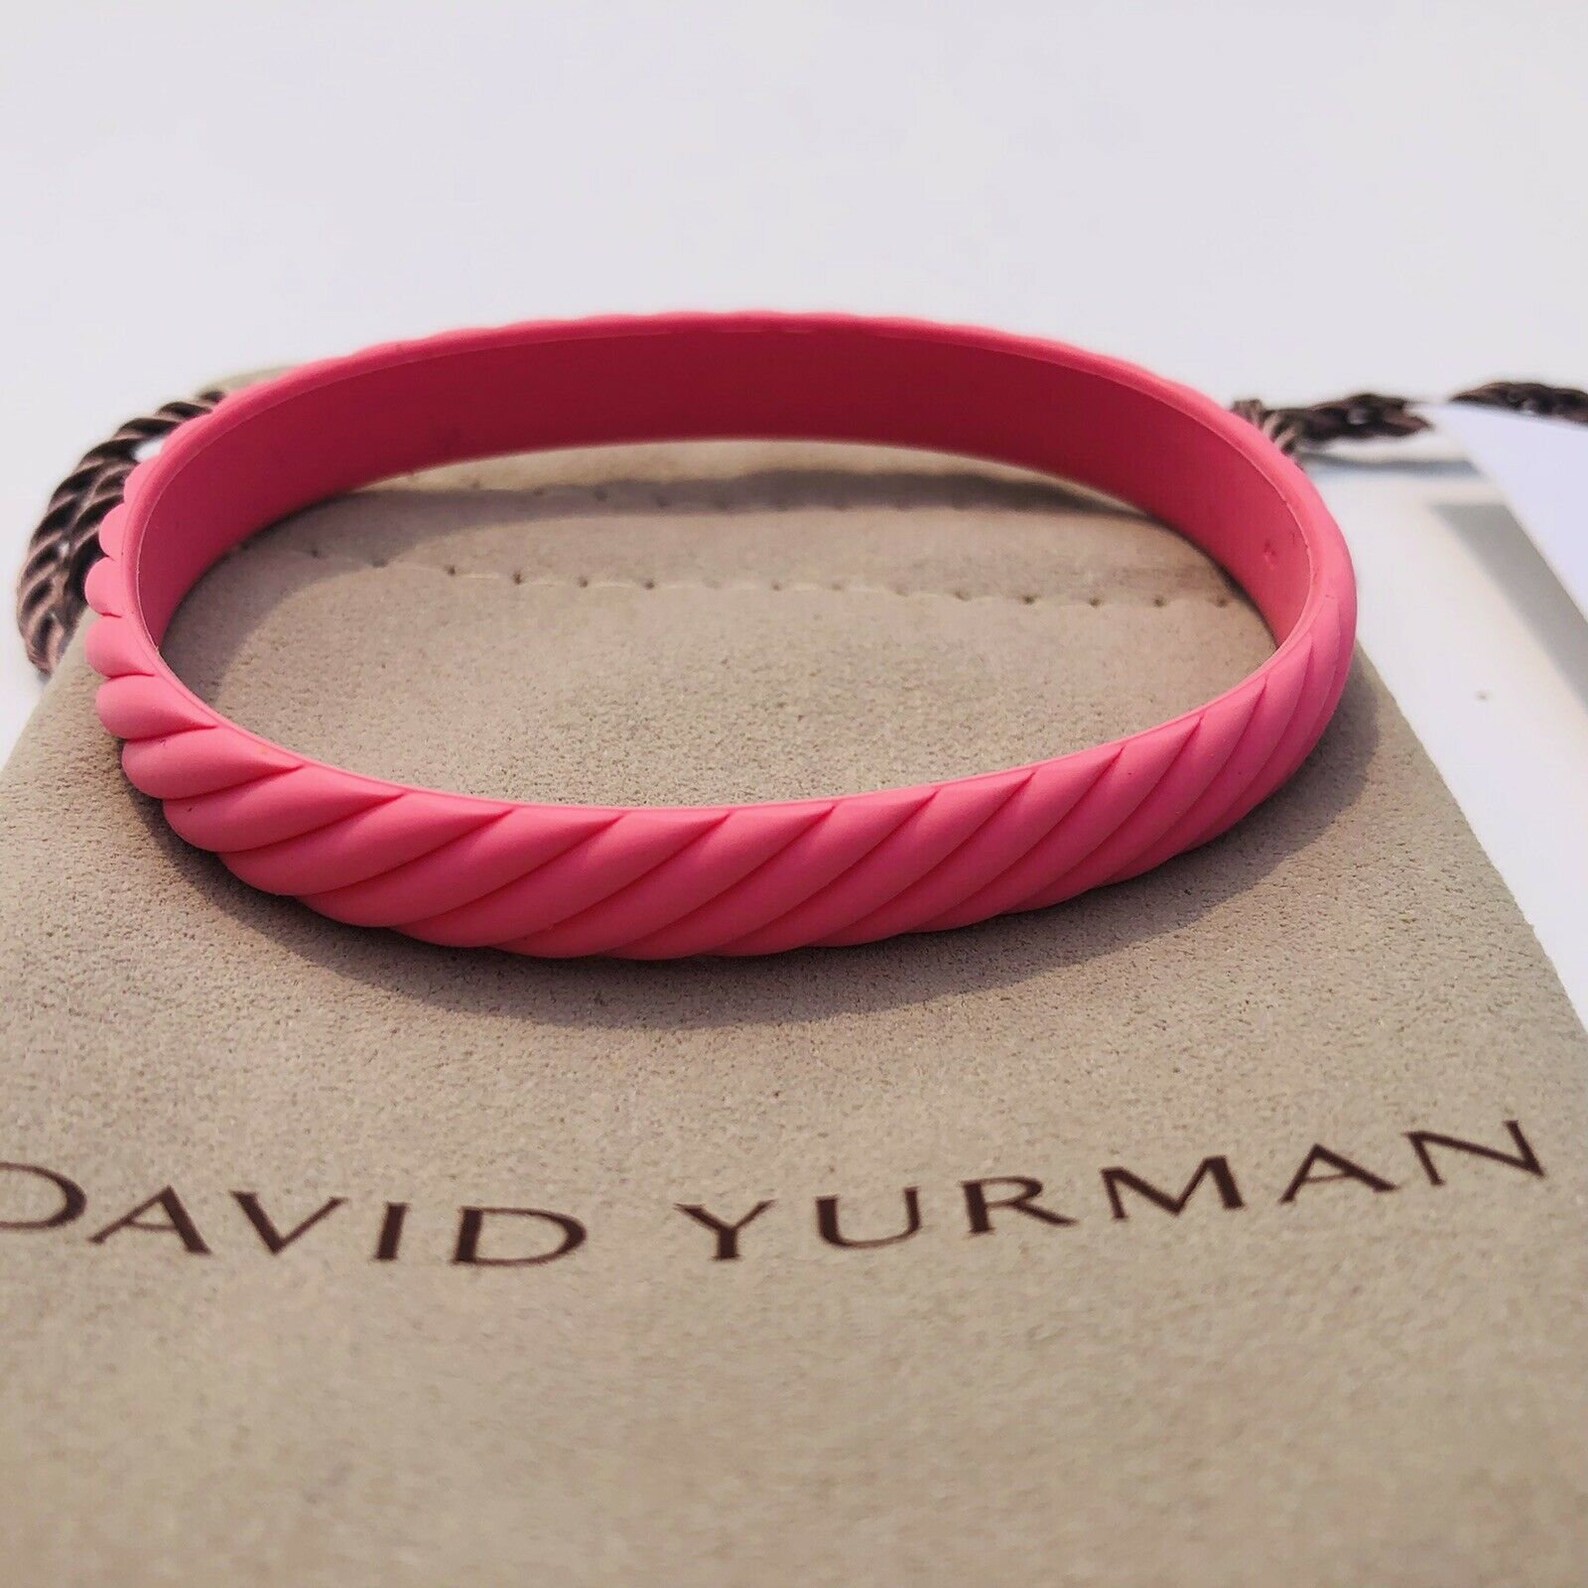 Authentic David Yurman Pink Rubber Bracelet Size Small/Medium | Etsy